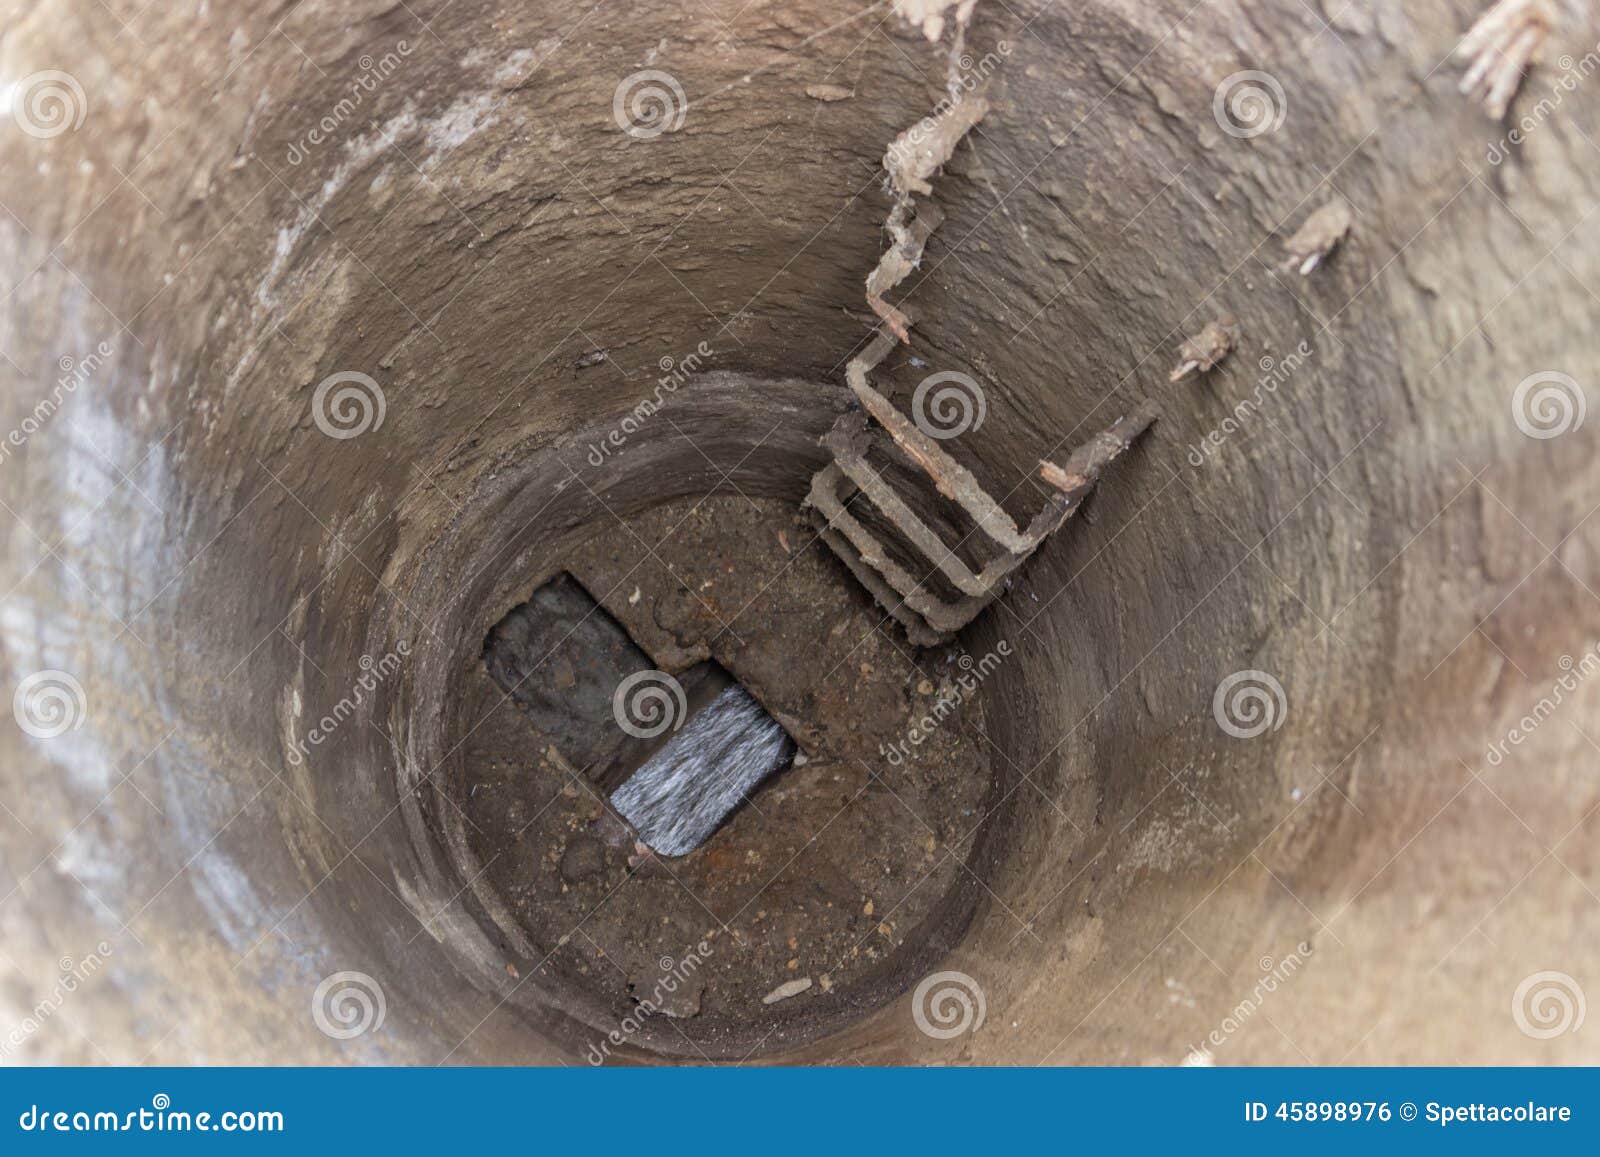 inside of manhole